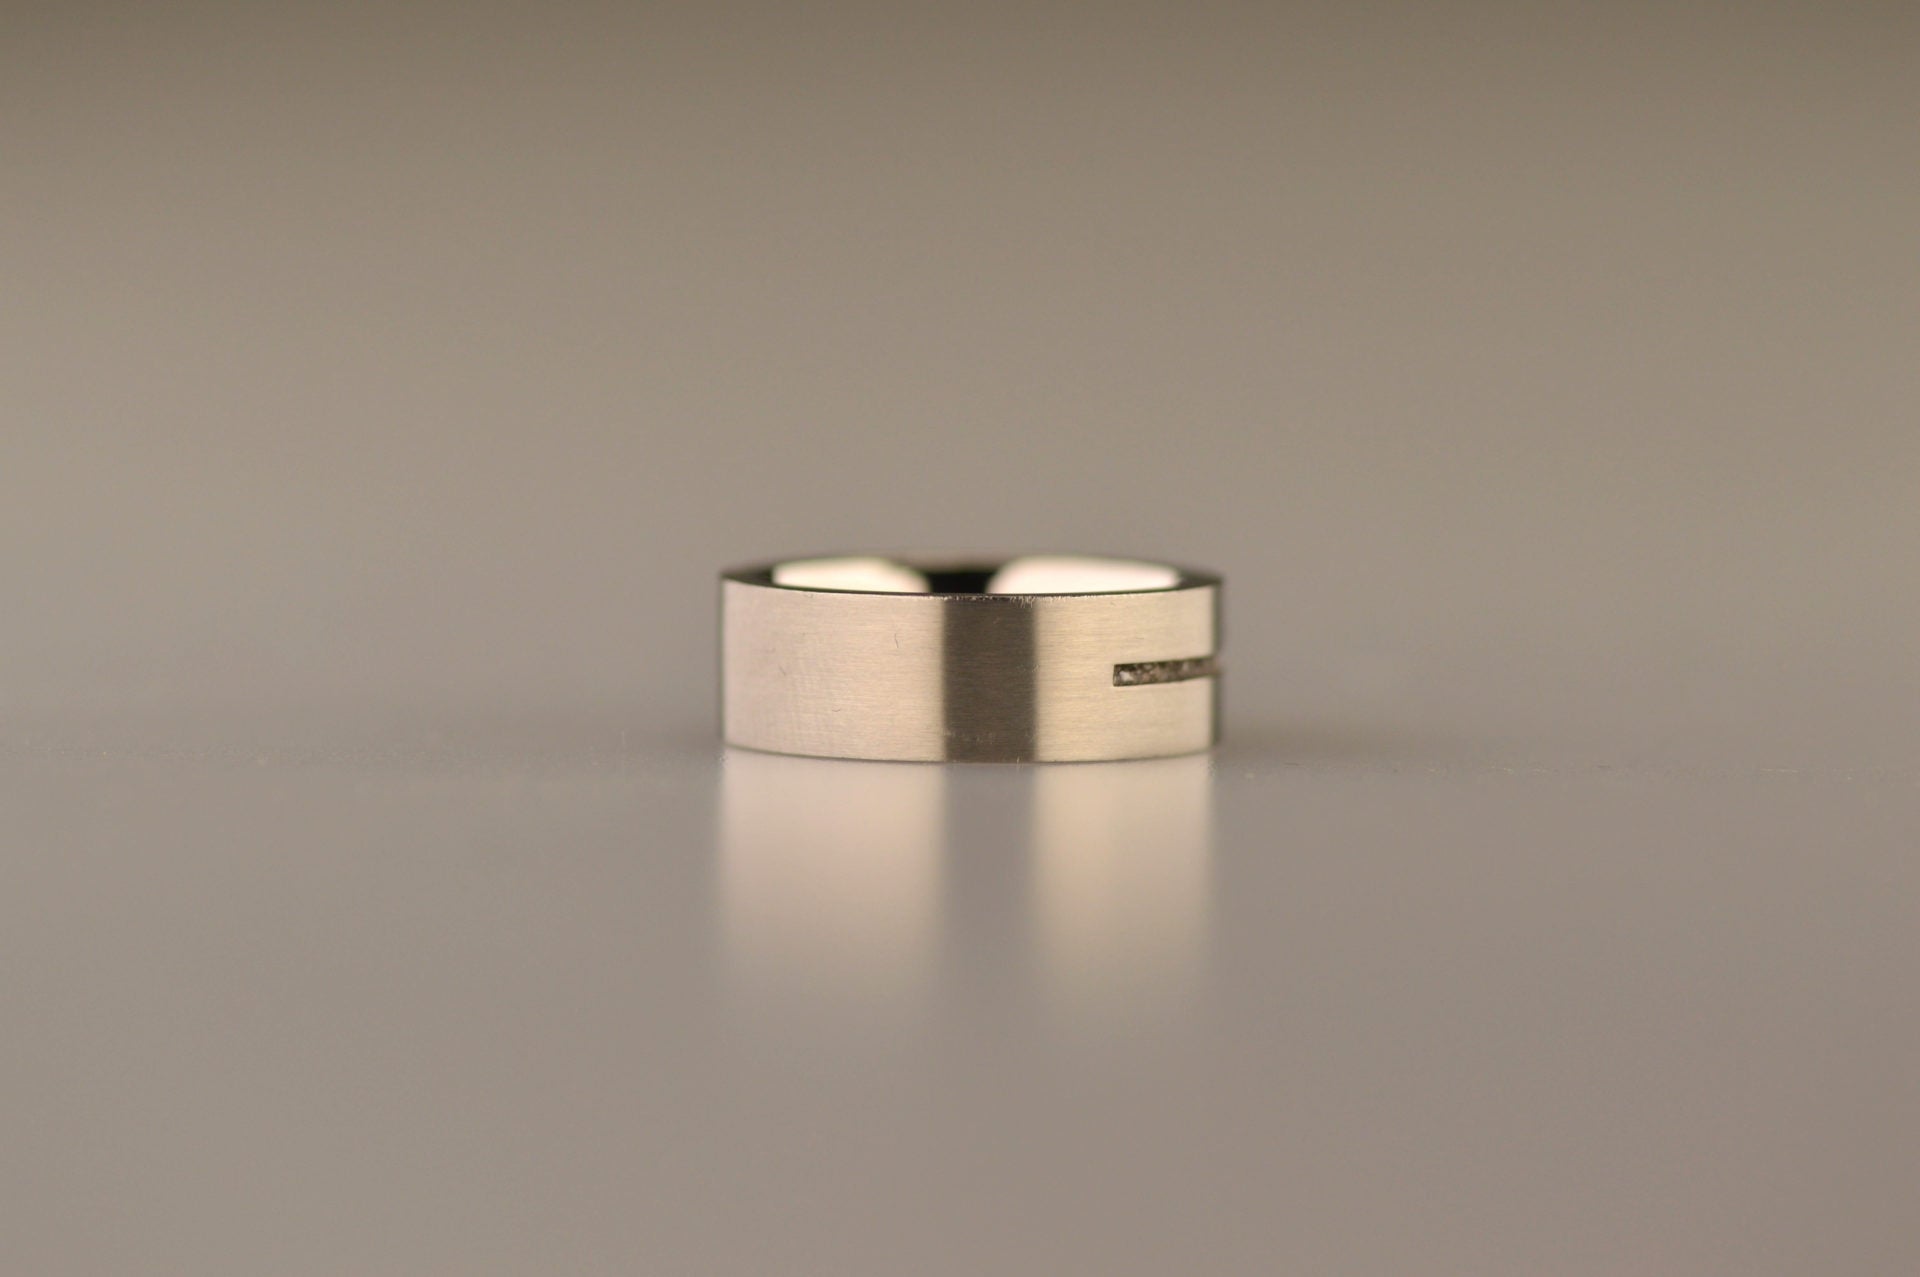 Ring als gedenksieraad 7 mm breed met één langwerpige streep waar as of haar  in verwerkt wordt.De asring is leverbaar in edelstaal, zilver en in 14 en 18 KT geelgoud/witgoud en roségoud. 